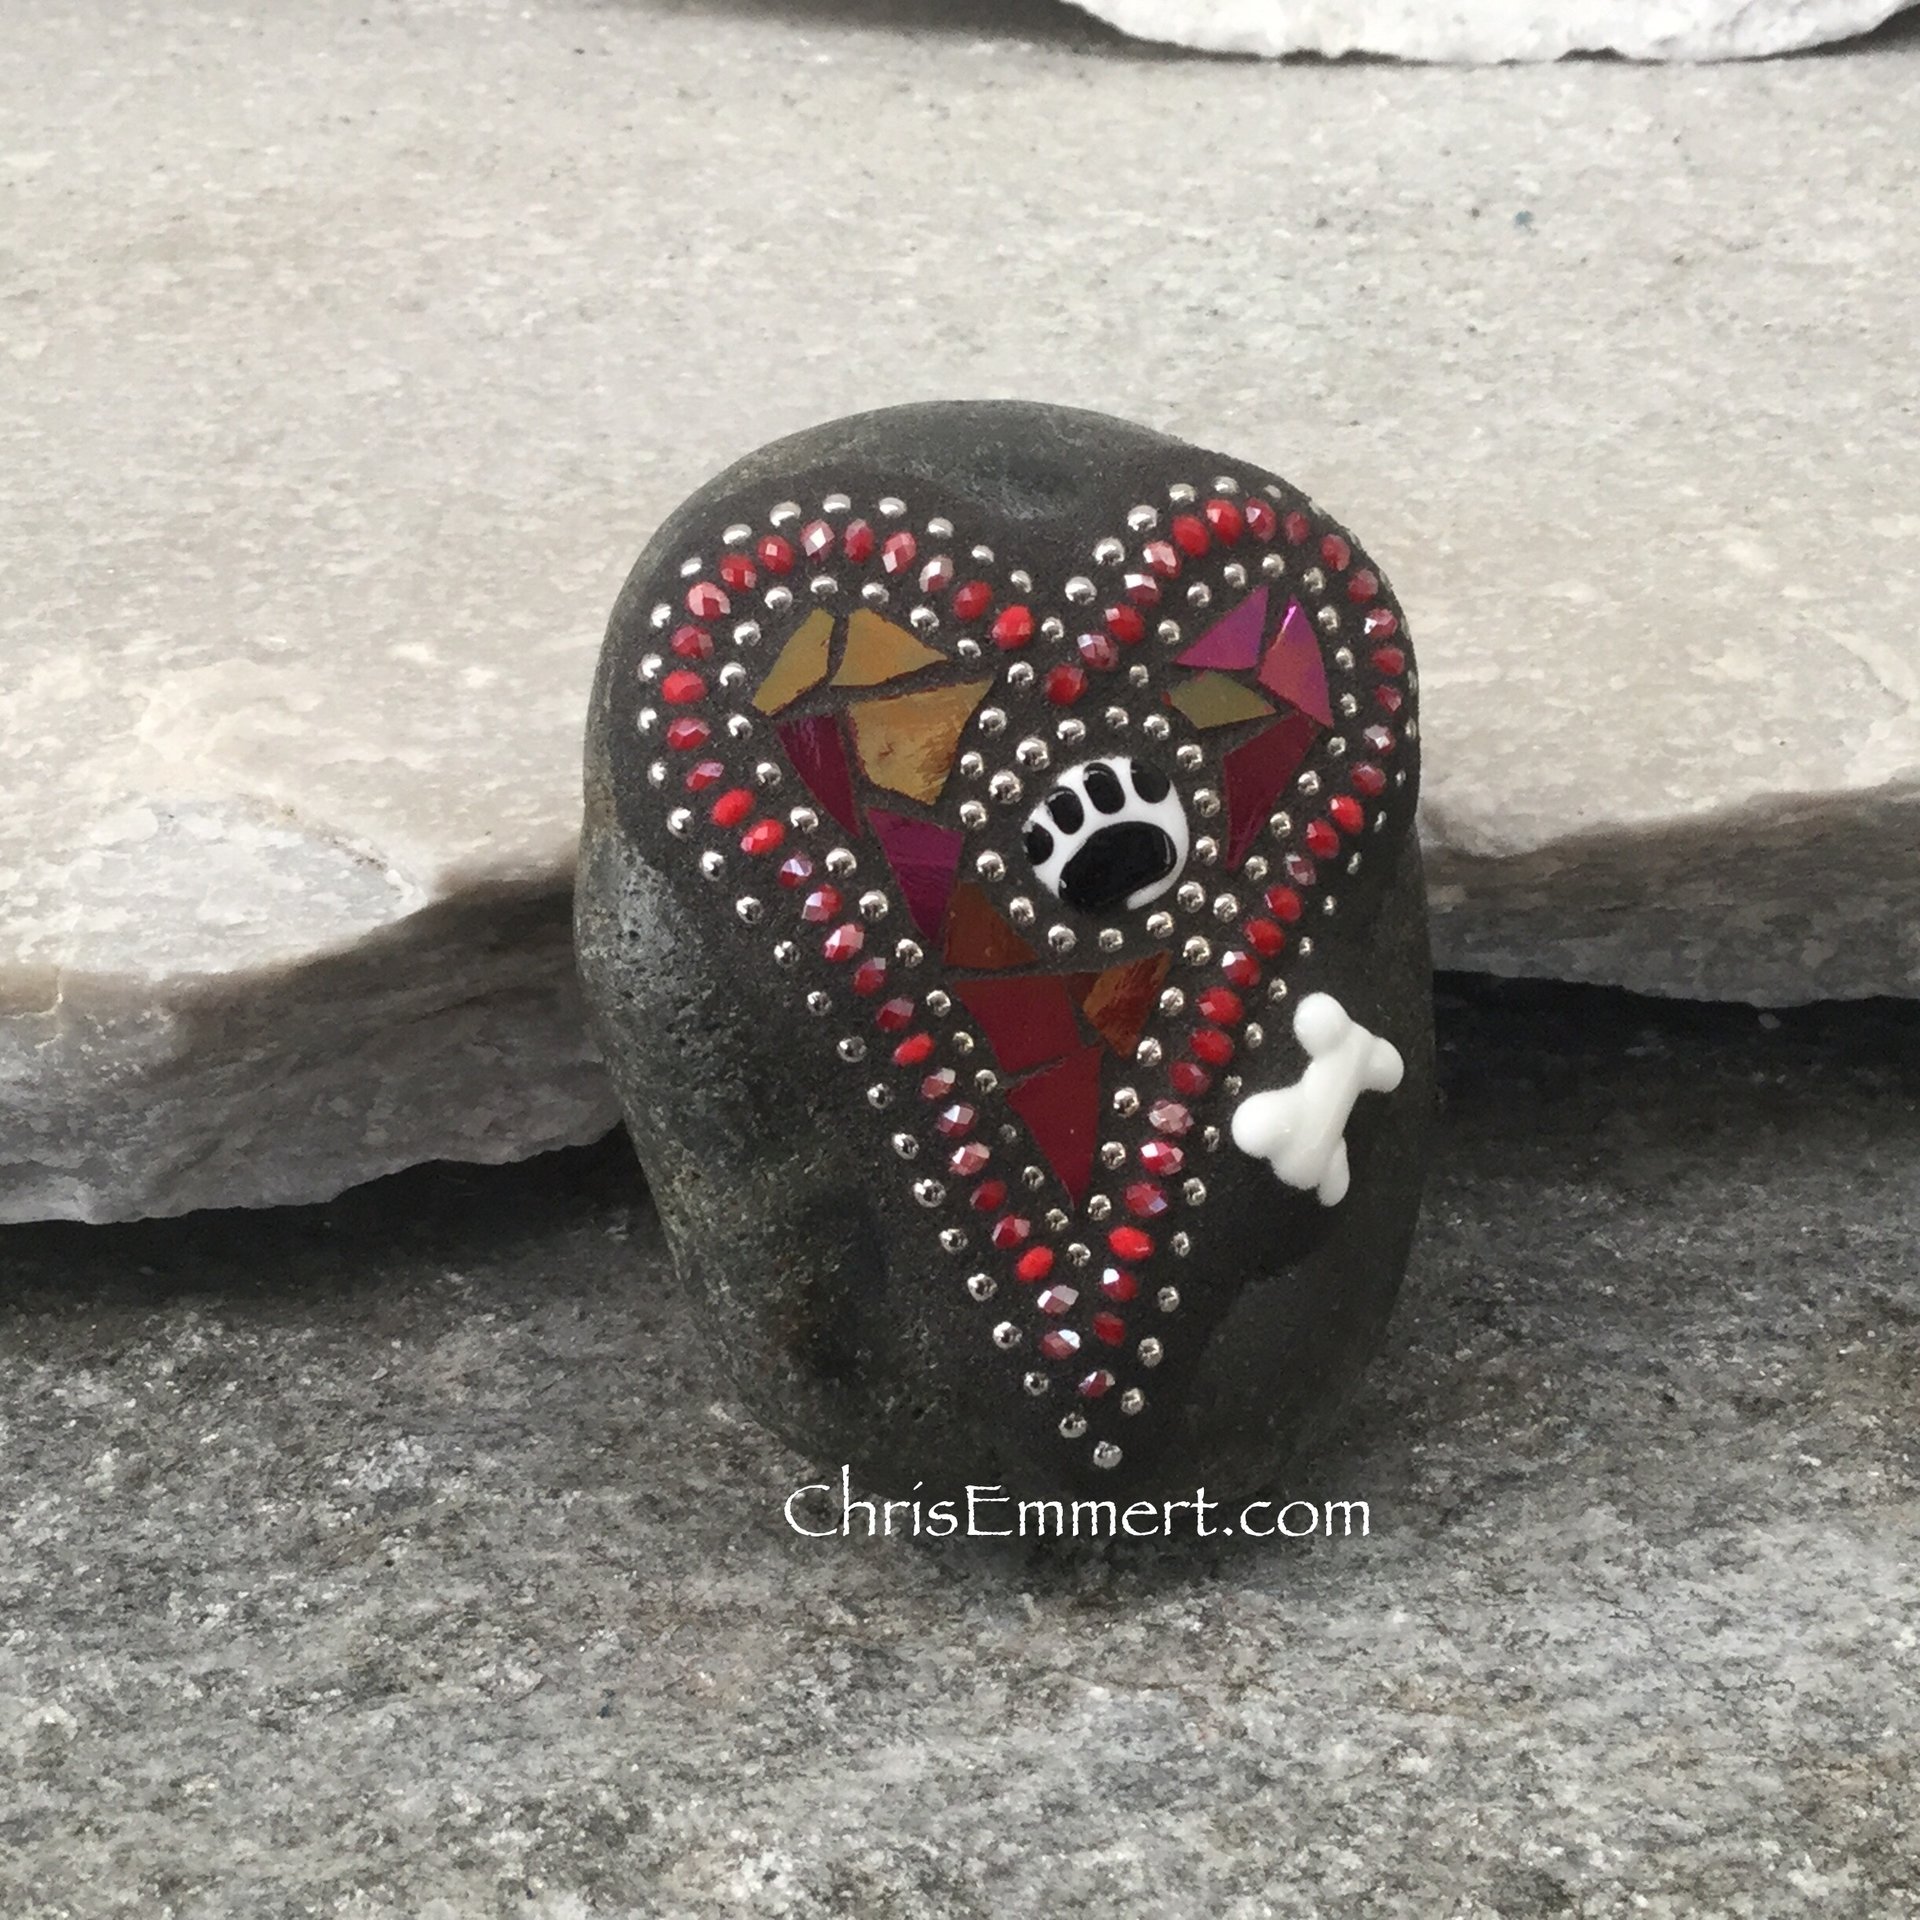 Garden Stone/Paperweights, Red Heart, Group Mosaic, Pet Memorial, Mosaic Garden Stone, Home Decor, Gardening, Gardening Gift,